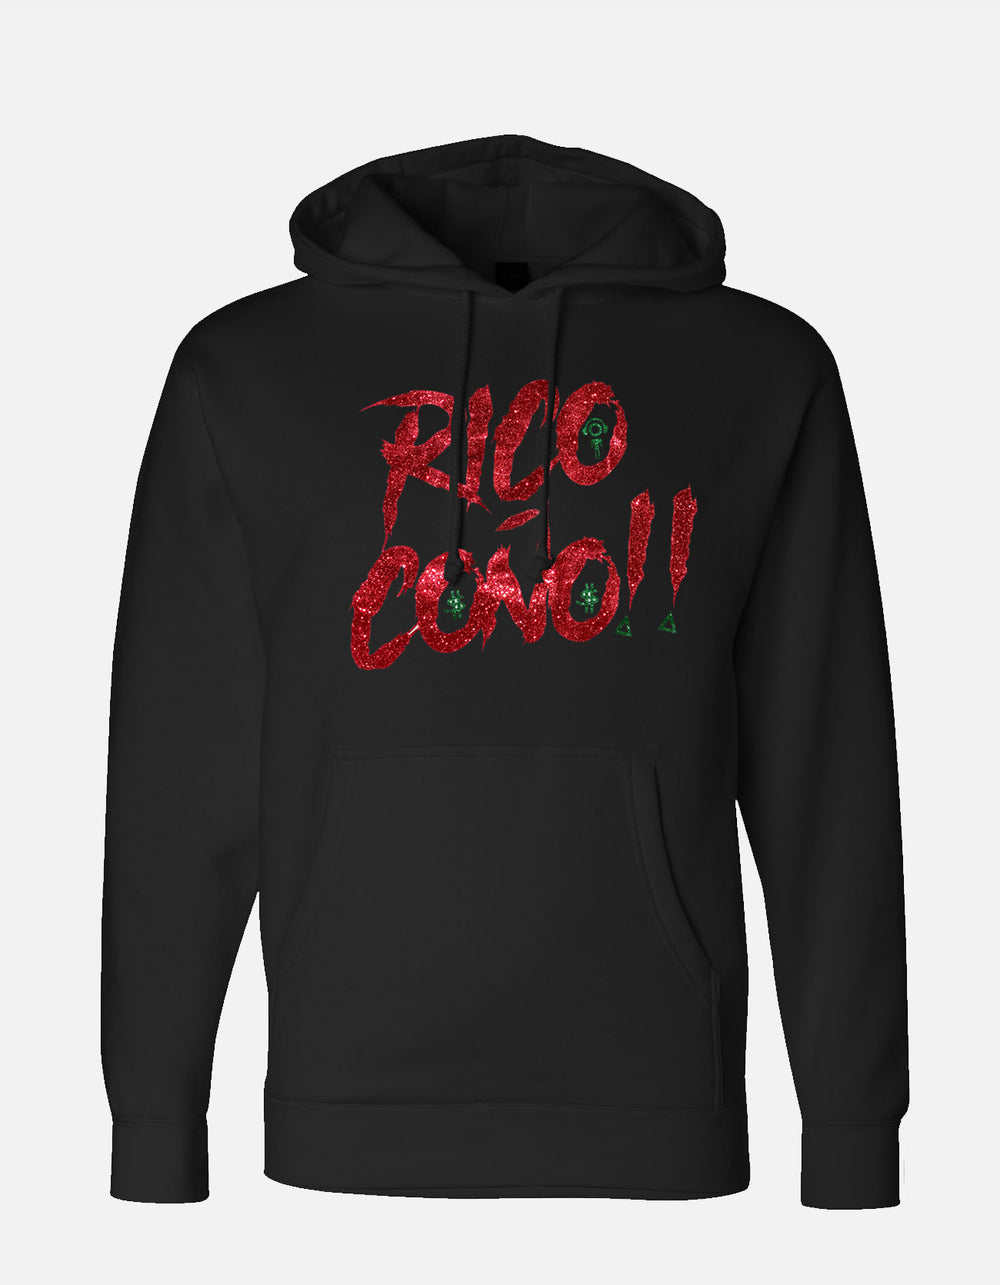 Rico CoñO x TRI hoodie